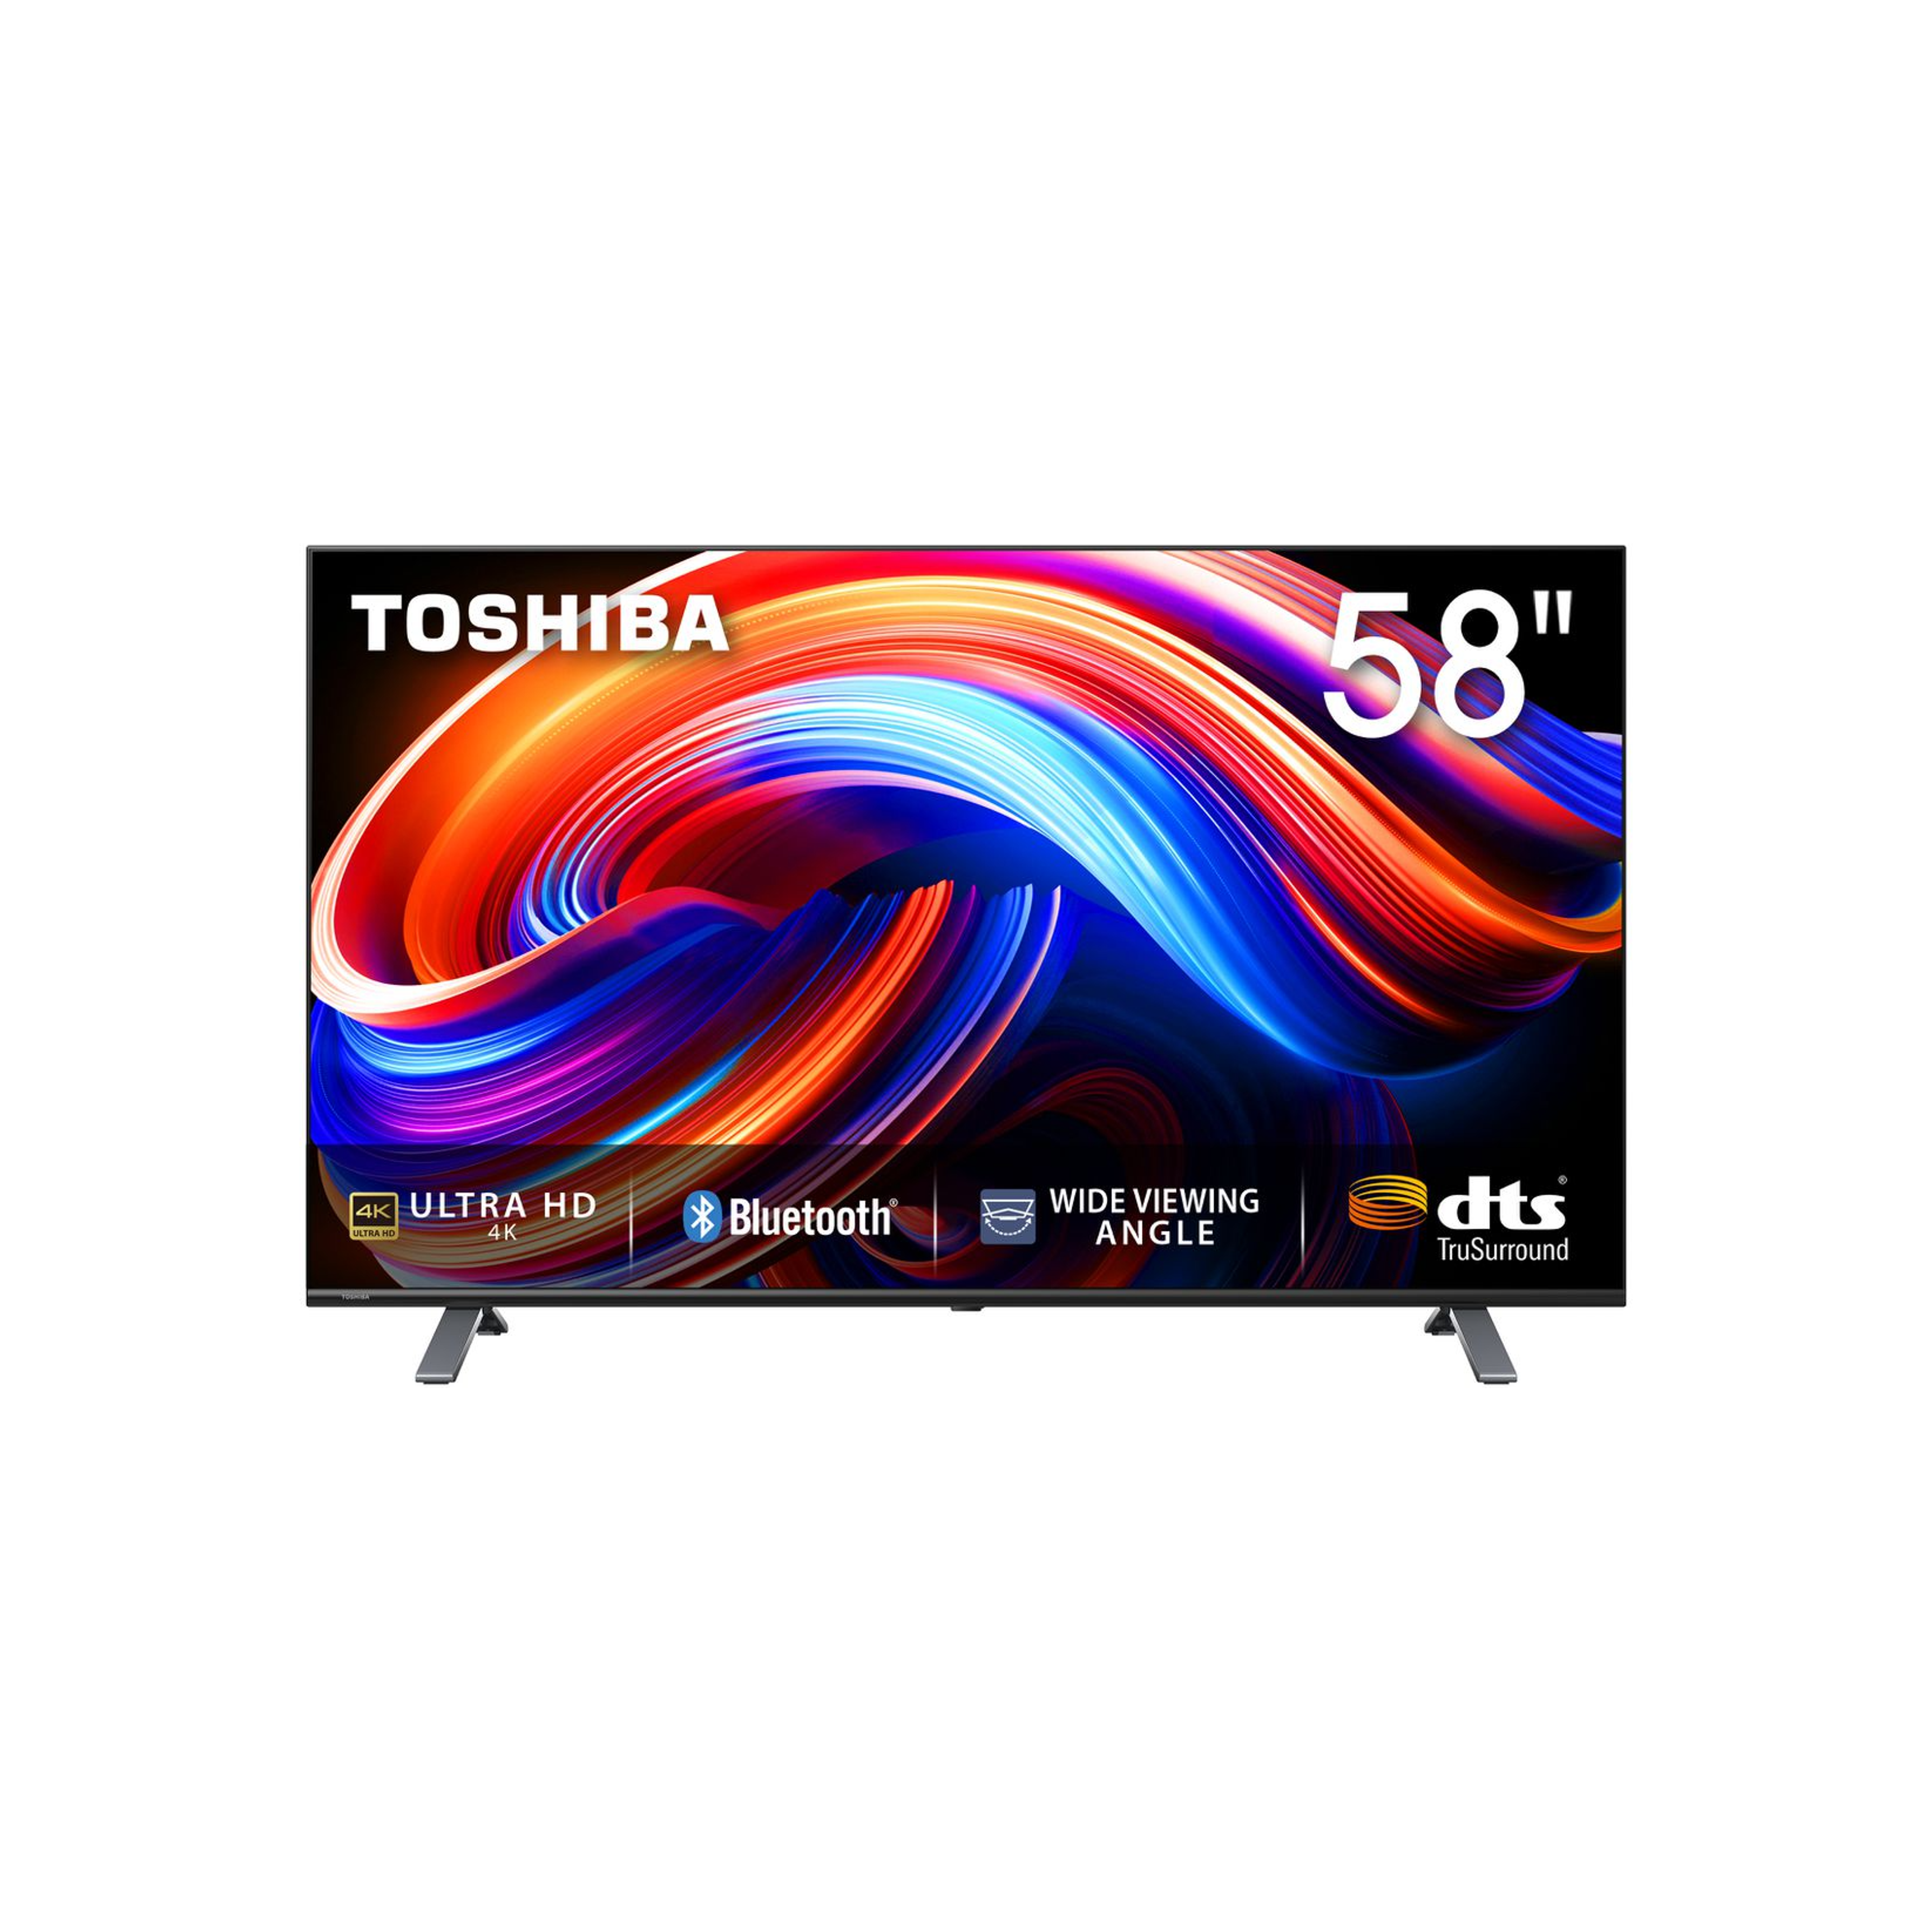 Toshiba 58" UHD HDR Smart 4k Dynamic Crystal Colour LED TV